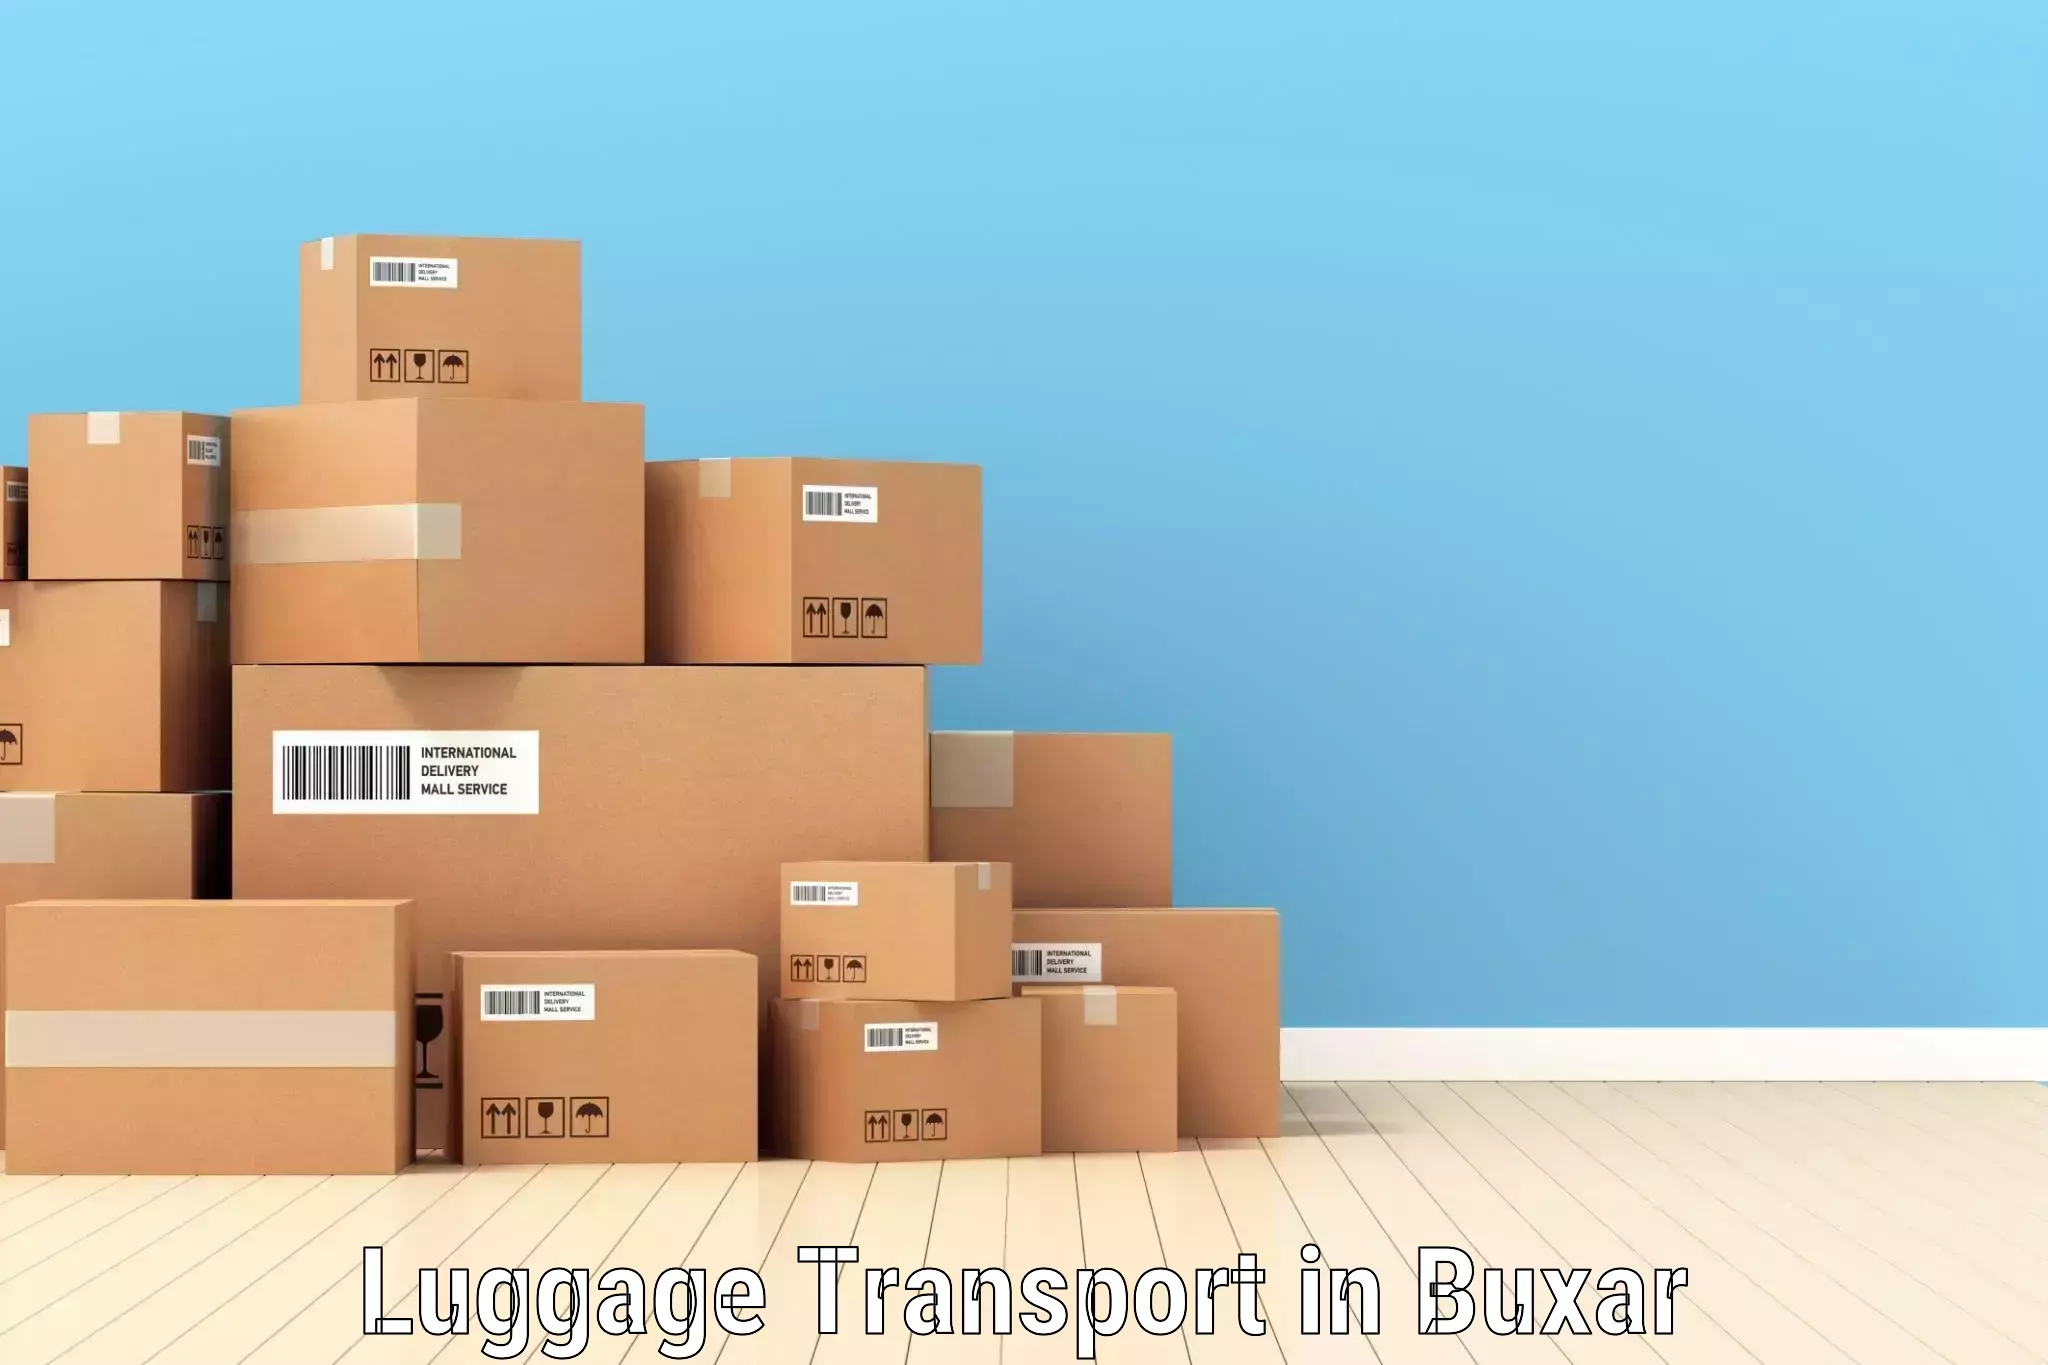 Regional luggage transport in Buxar